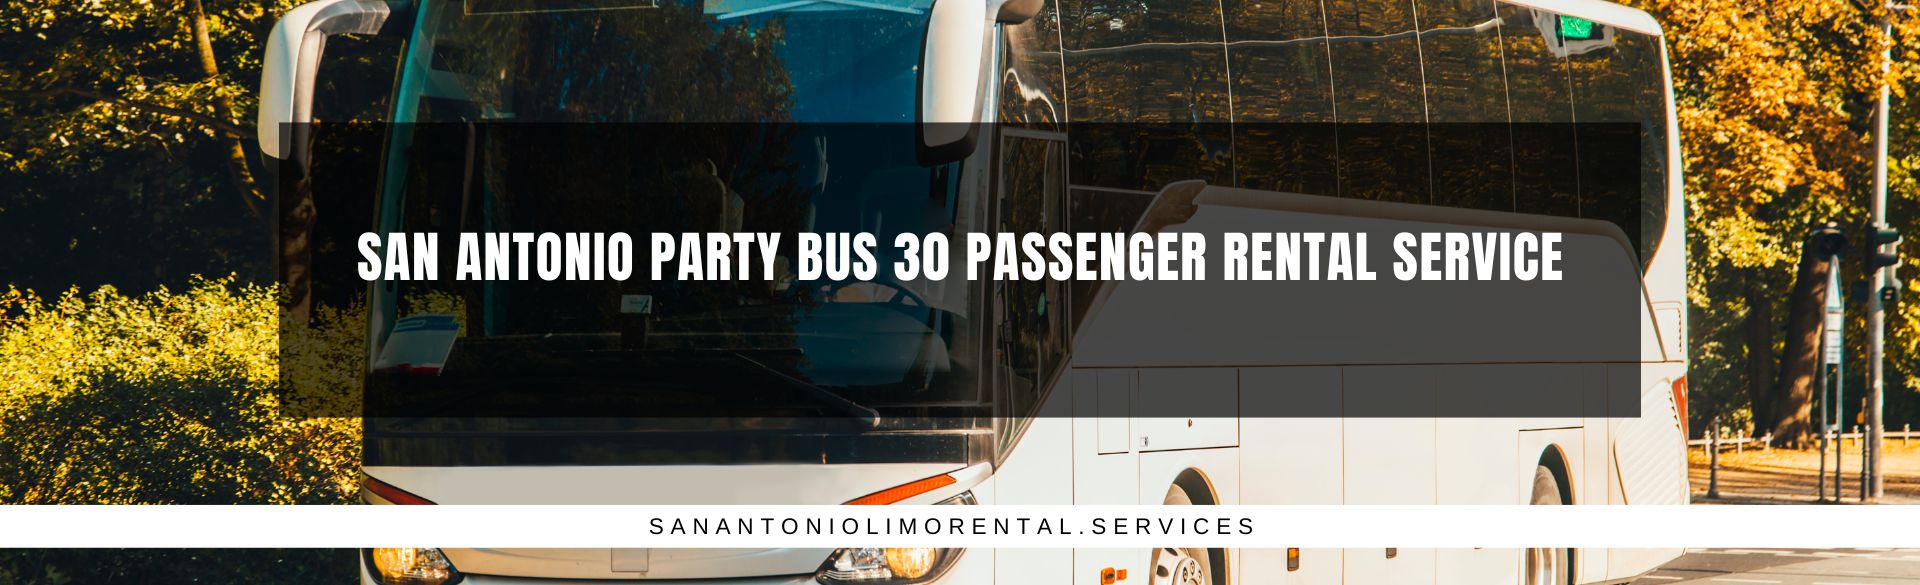 San Antonio Party Bus 30 Passenger Rental Service